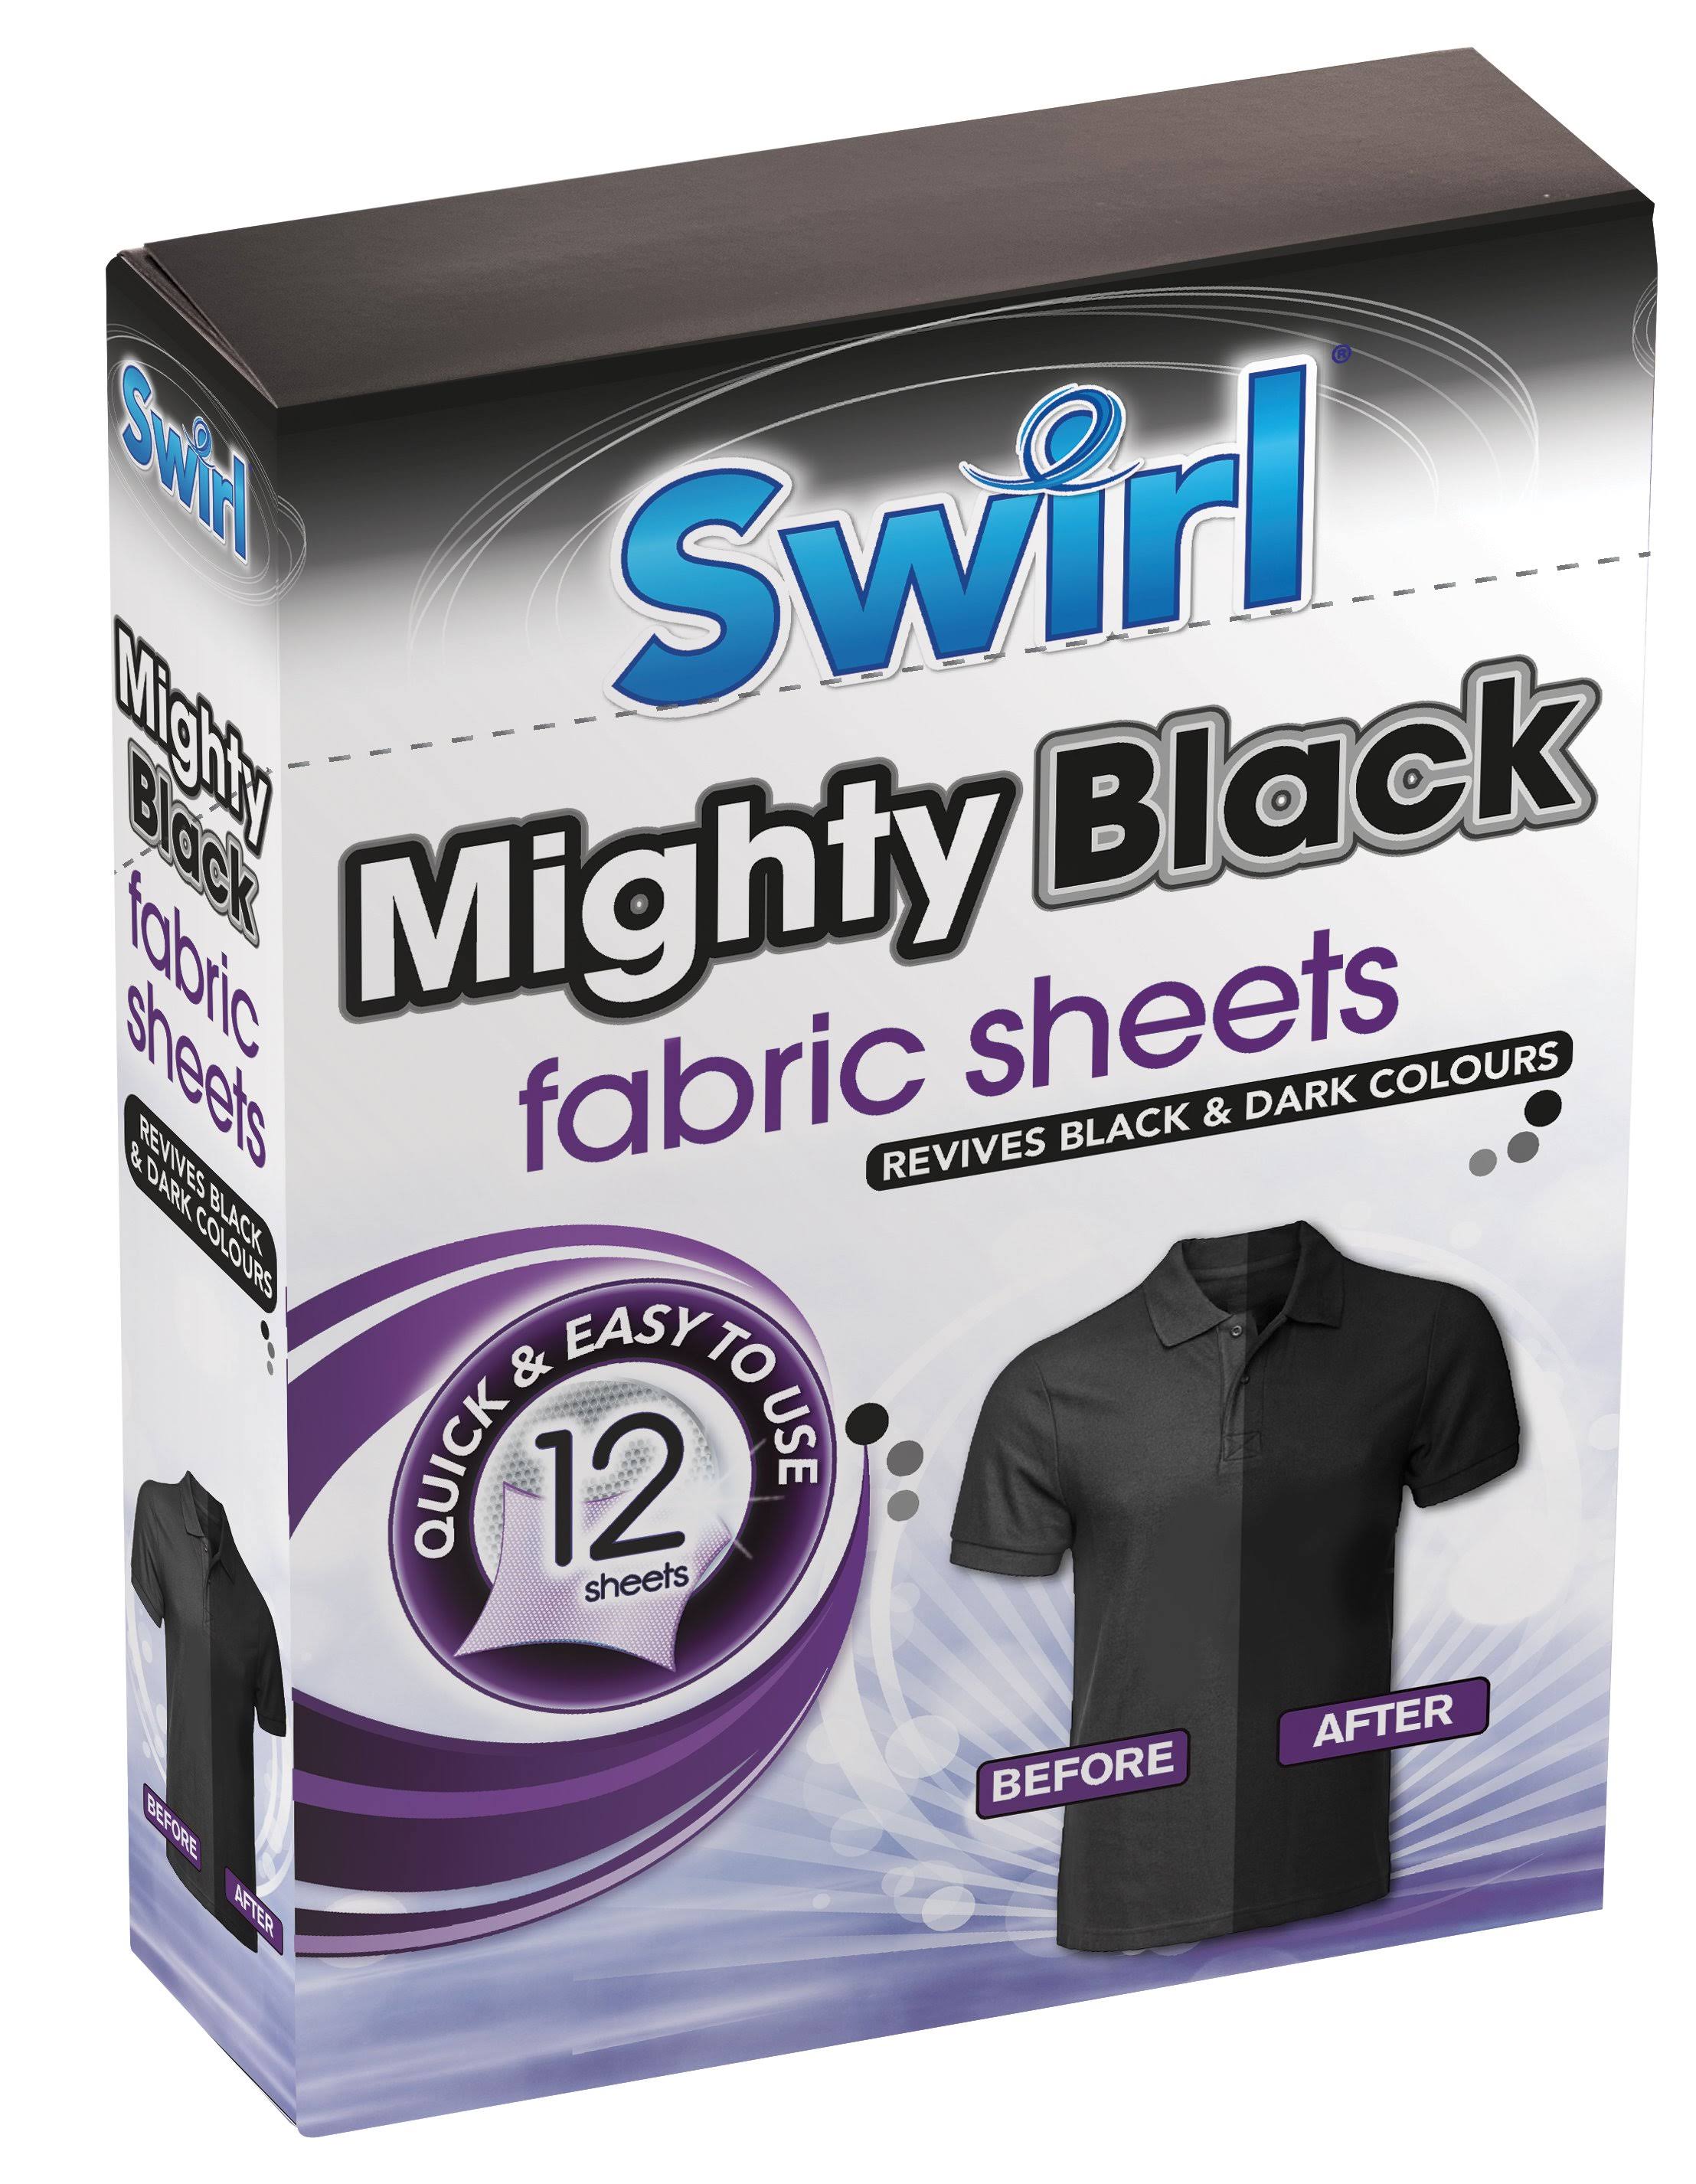 Swirl Mighty 12 Black Fabric Sheets